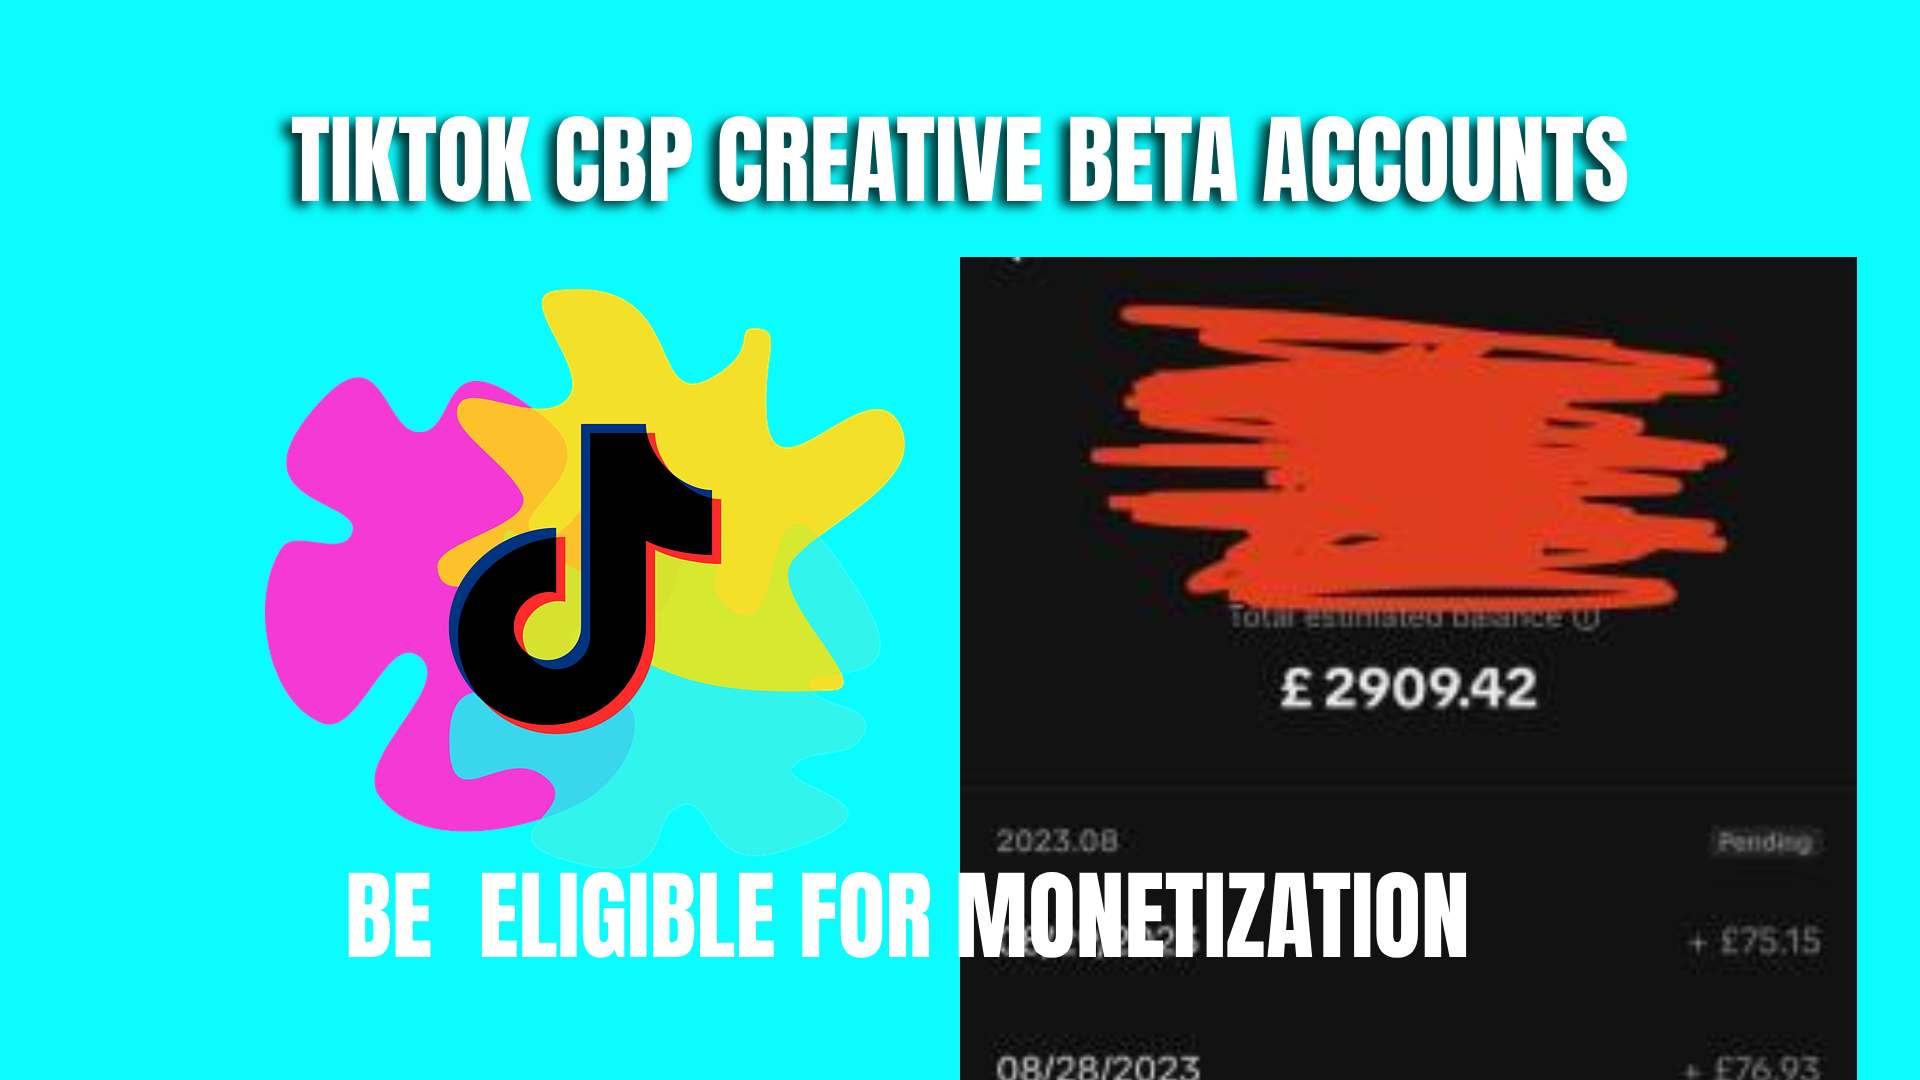 TikTok CBP Creativity Beta Accounts — Eligible for monetization